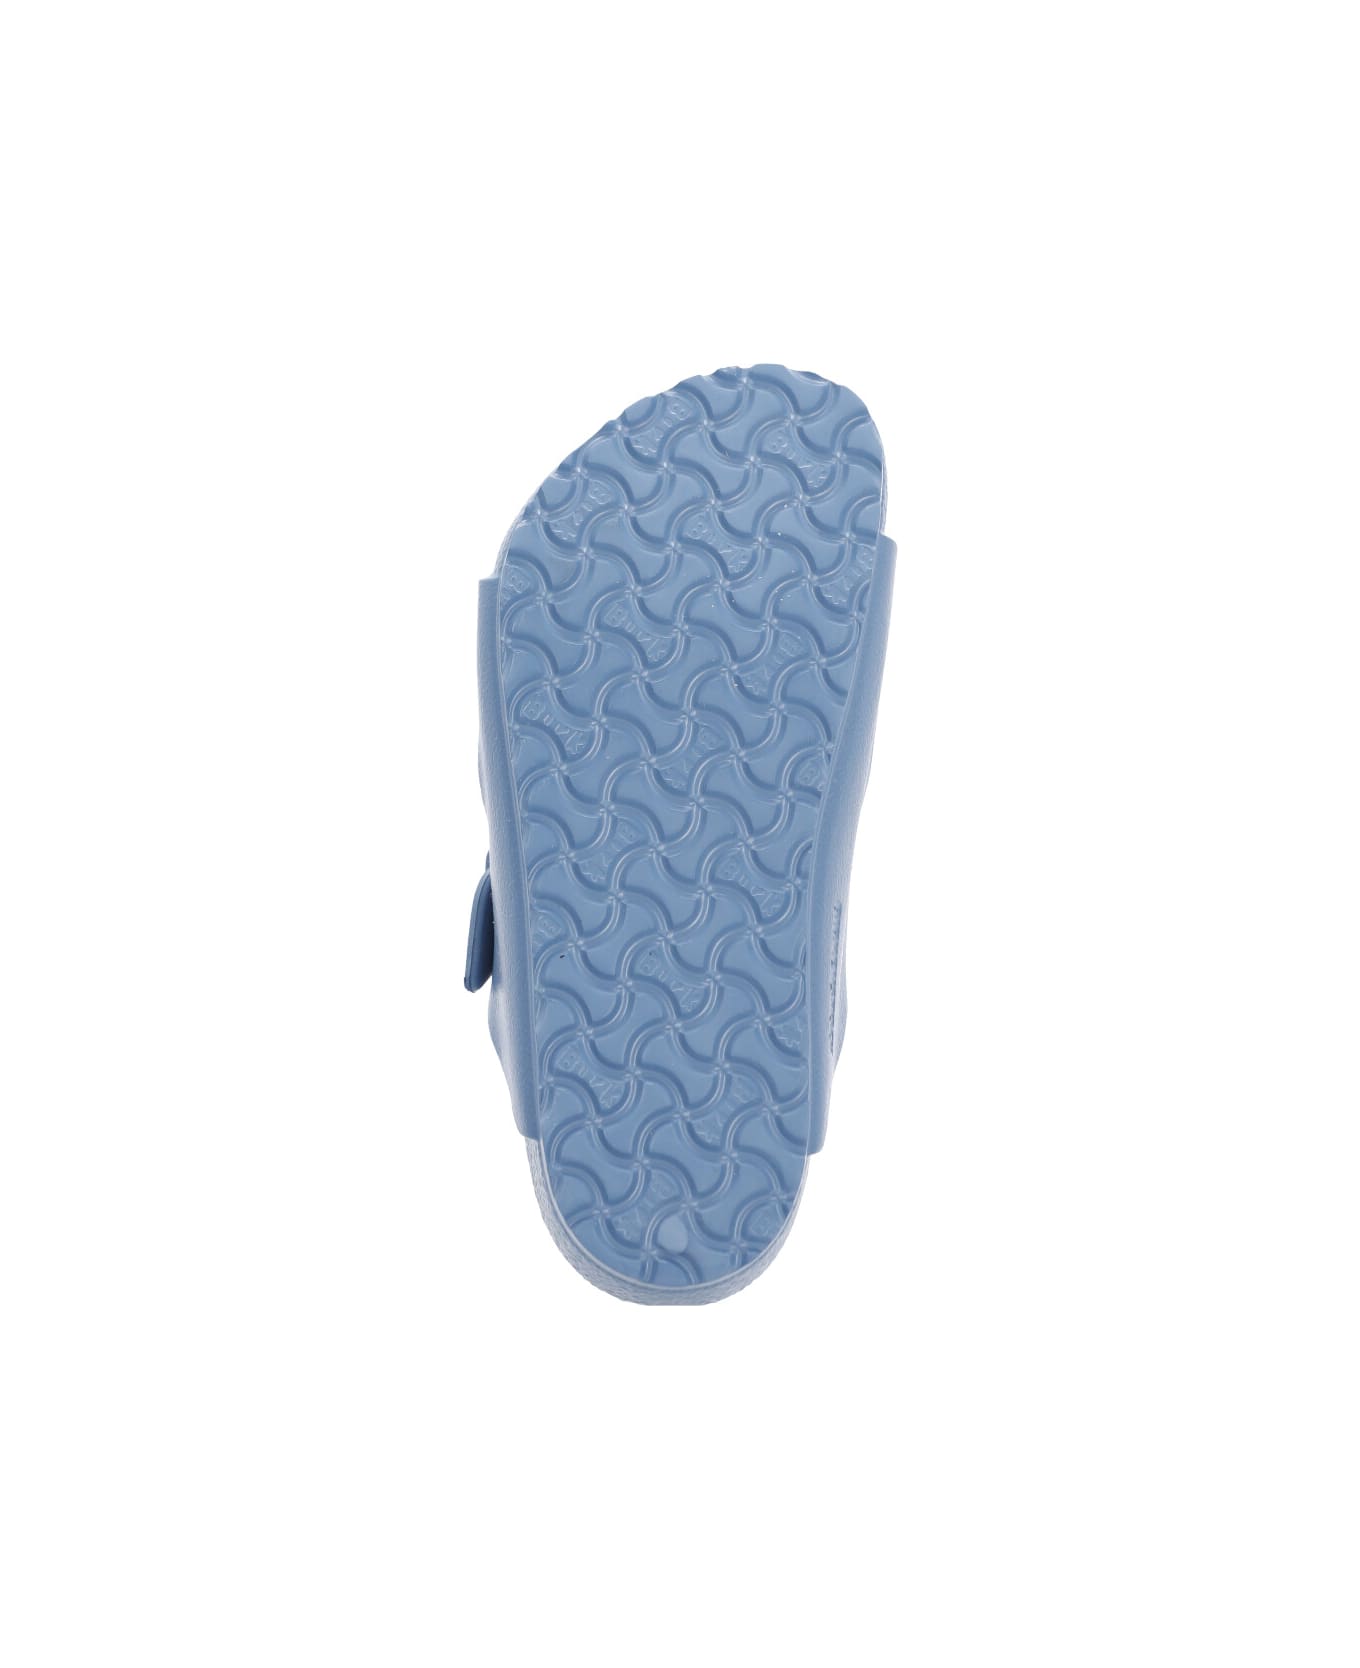 Birkenstock Slipper With Buckles - Light Blue